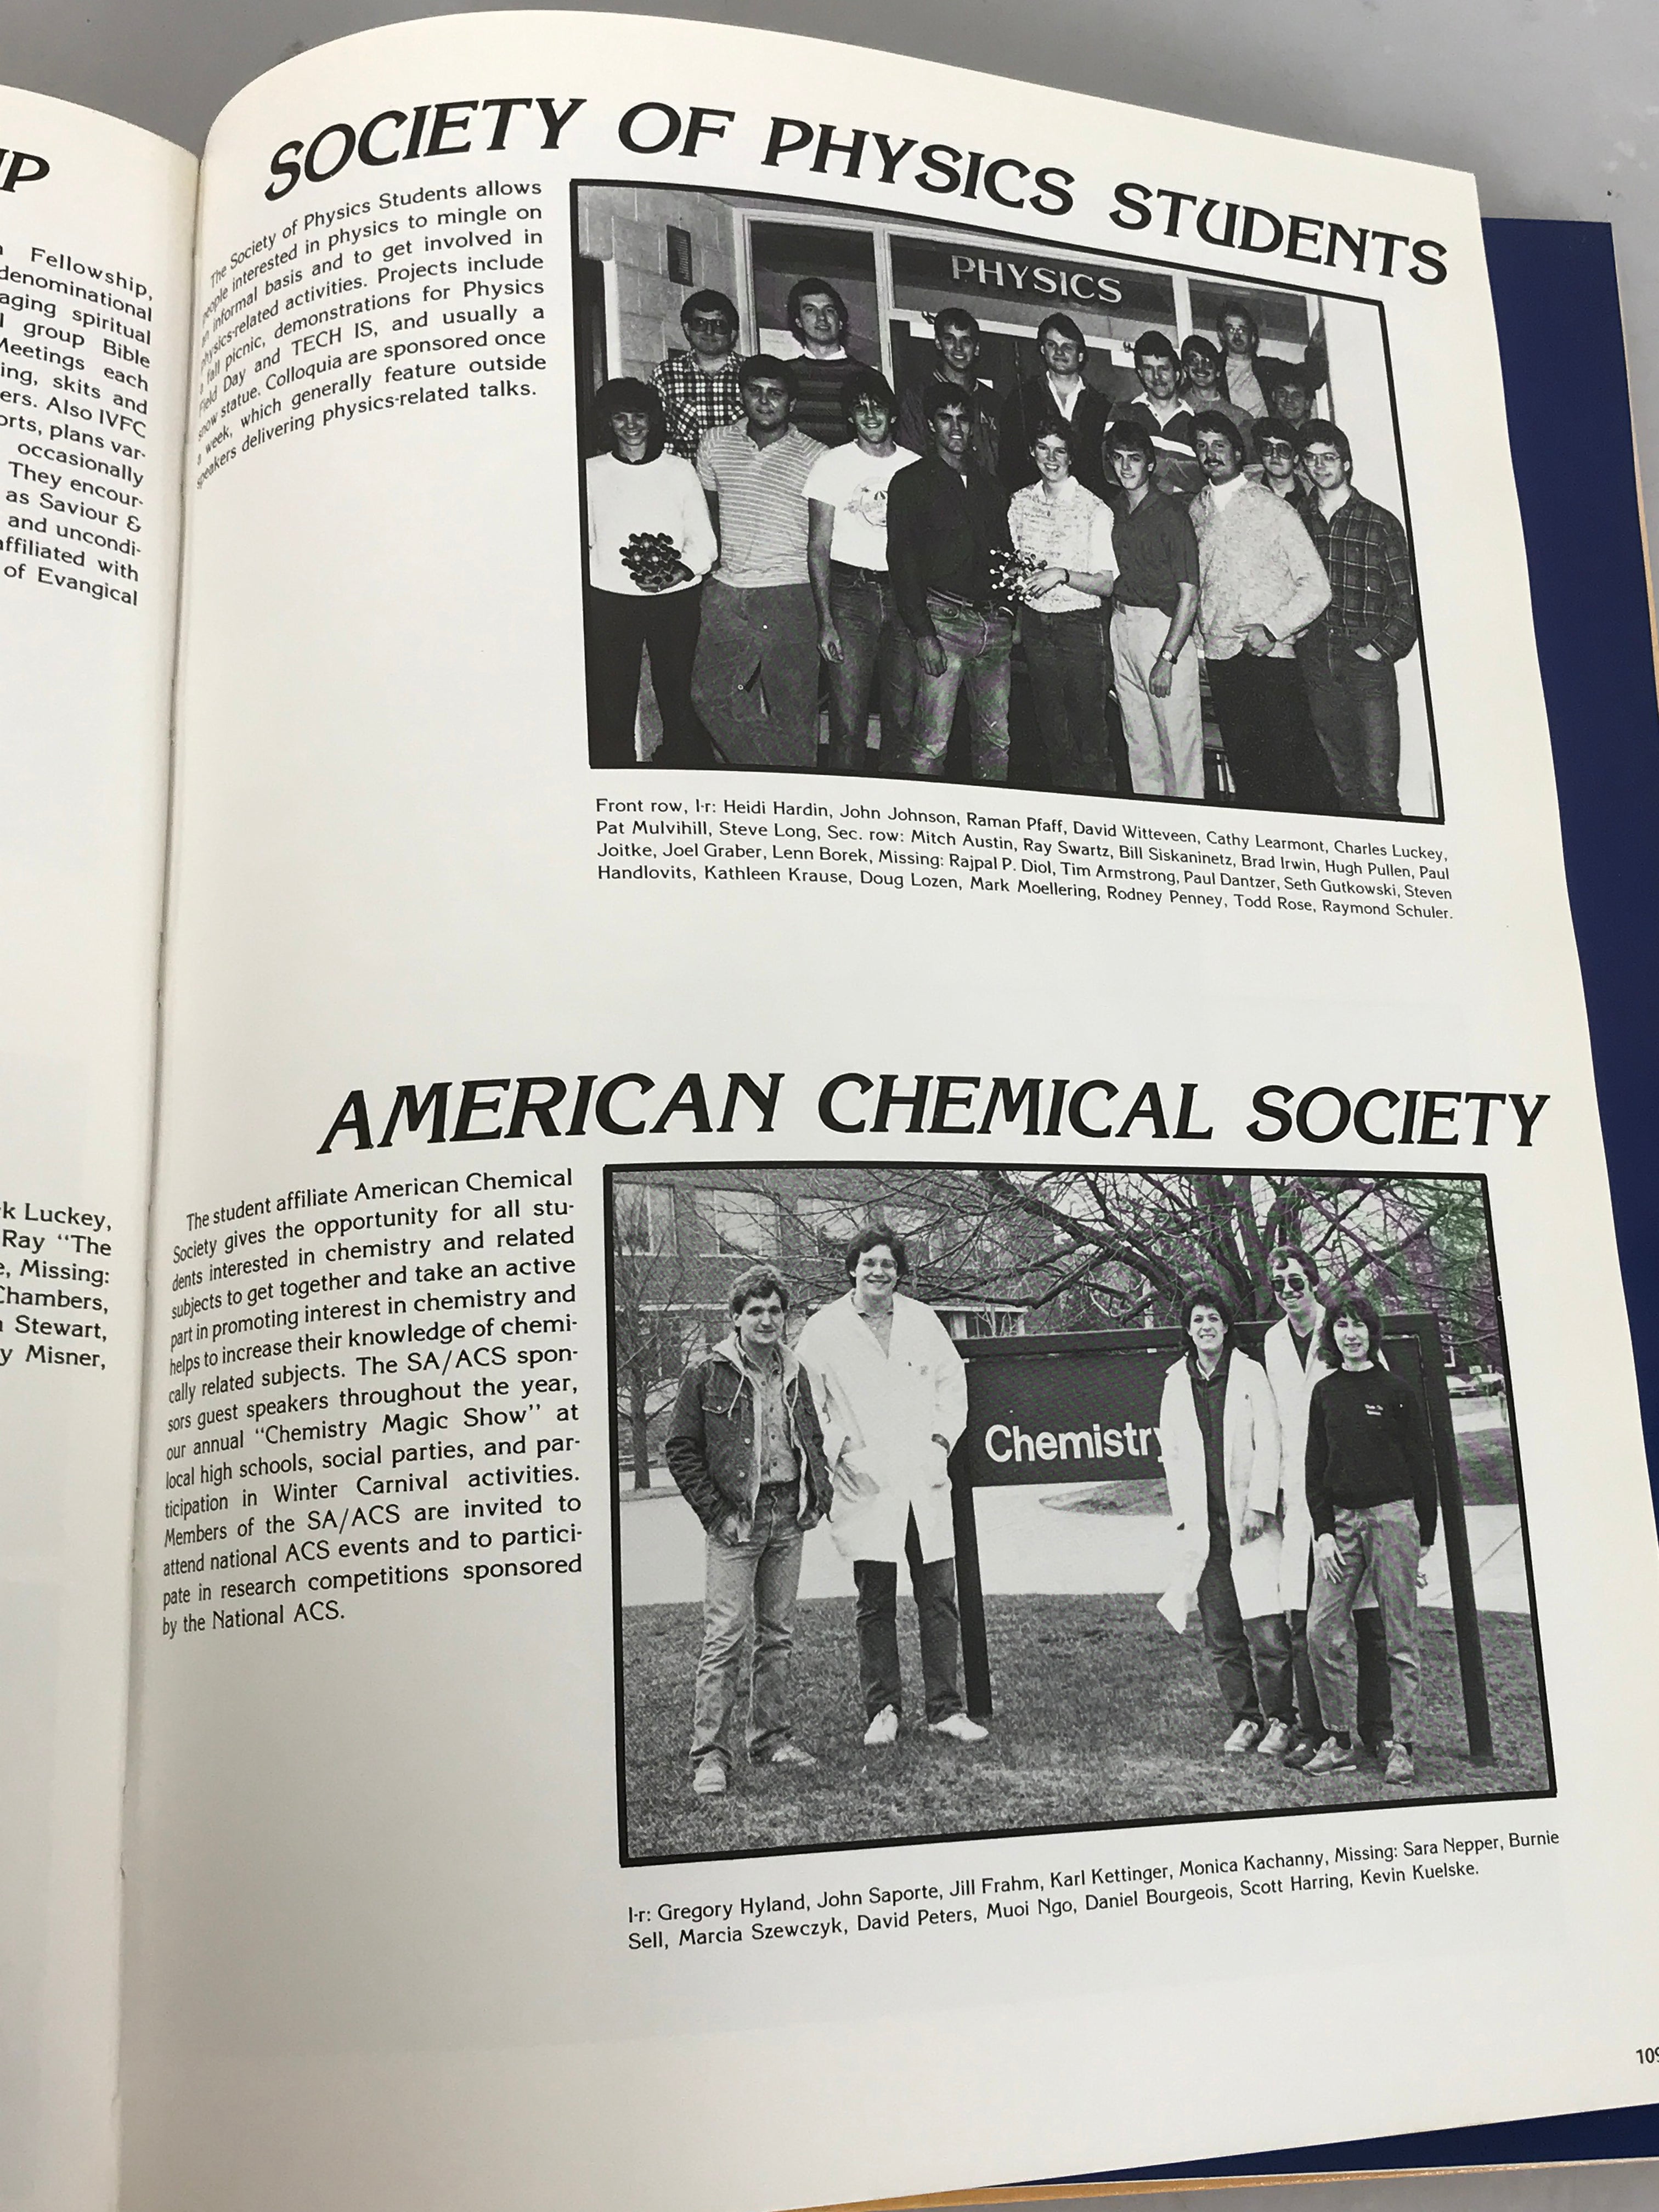 1986 Michigan Technological University Yearbook Houghton Michigan HC